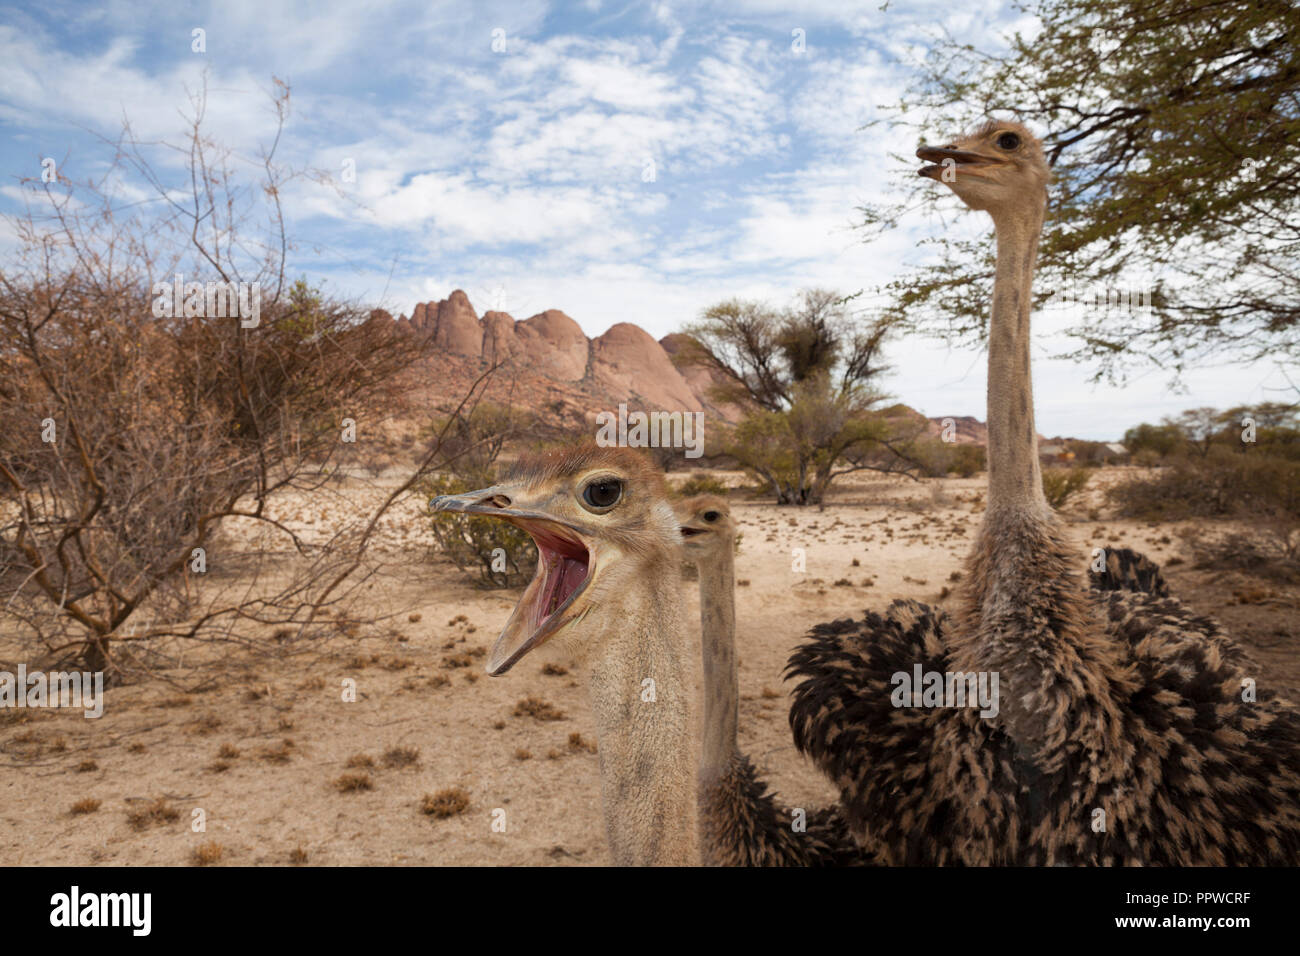 South African Ostrich, Struthio camelus australis, Spitzkoppe, Namibia Stock Photo